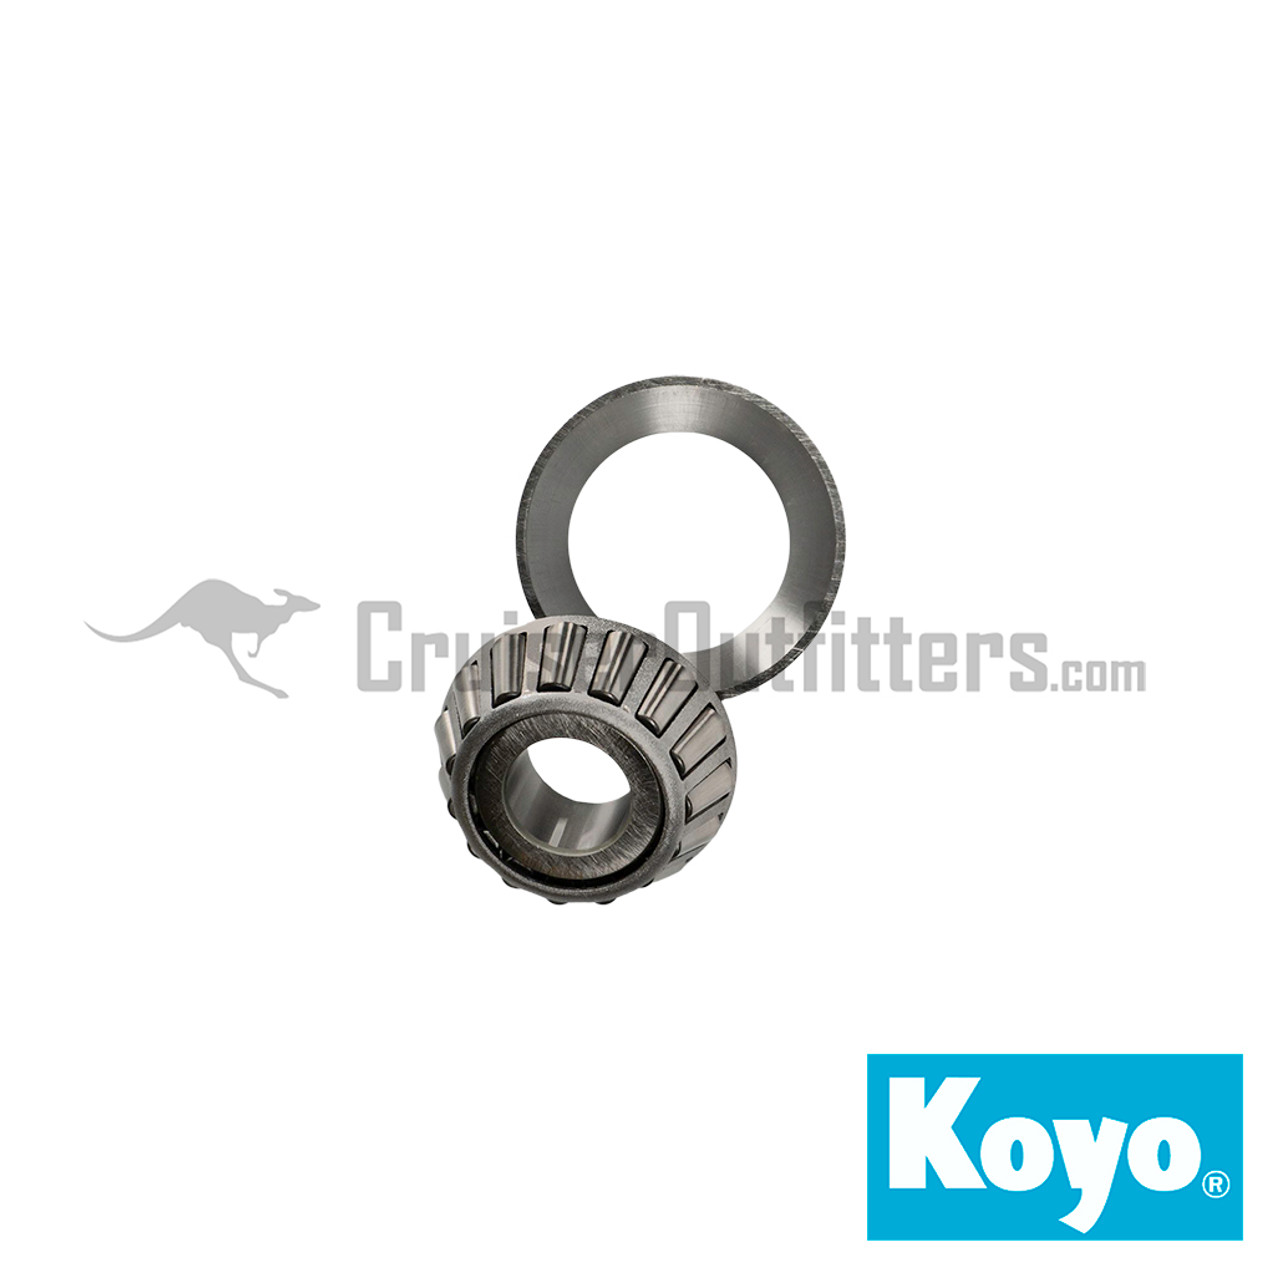 Knuckle Bearing - Koyo - Fits 1958 - 1/1990 4x/5x/6x/7x & 1979 - 1985 PU/4Runner (FA17001)